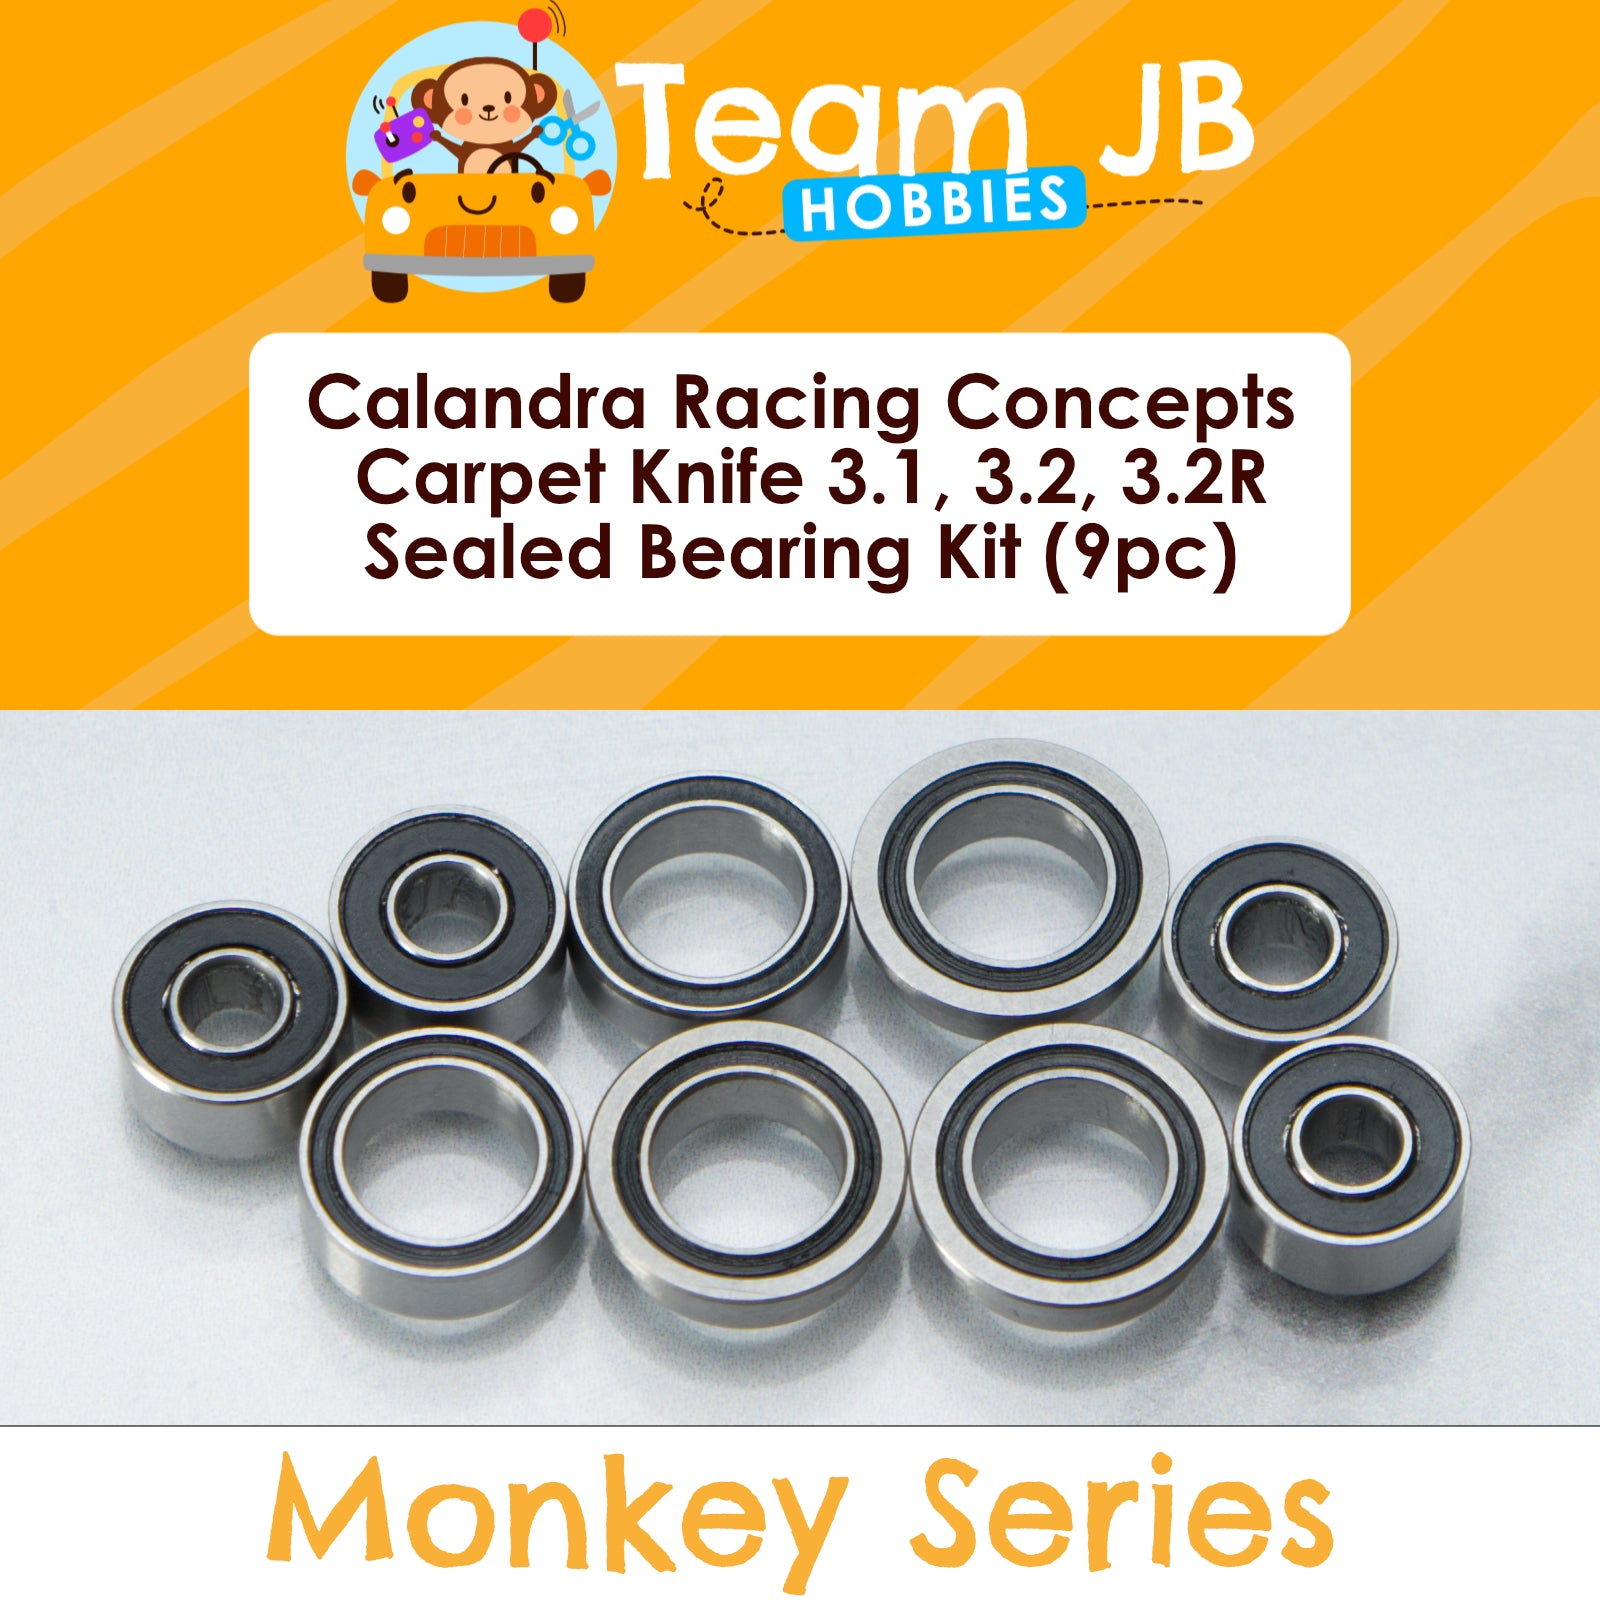 Calandra Racing Concepts Carpet Knife 3.1, 3.2, 3.2R, GEN X 1/10th - Sealed Bearing Kit